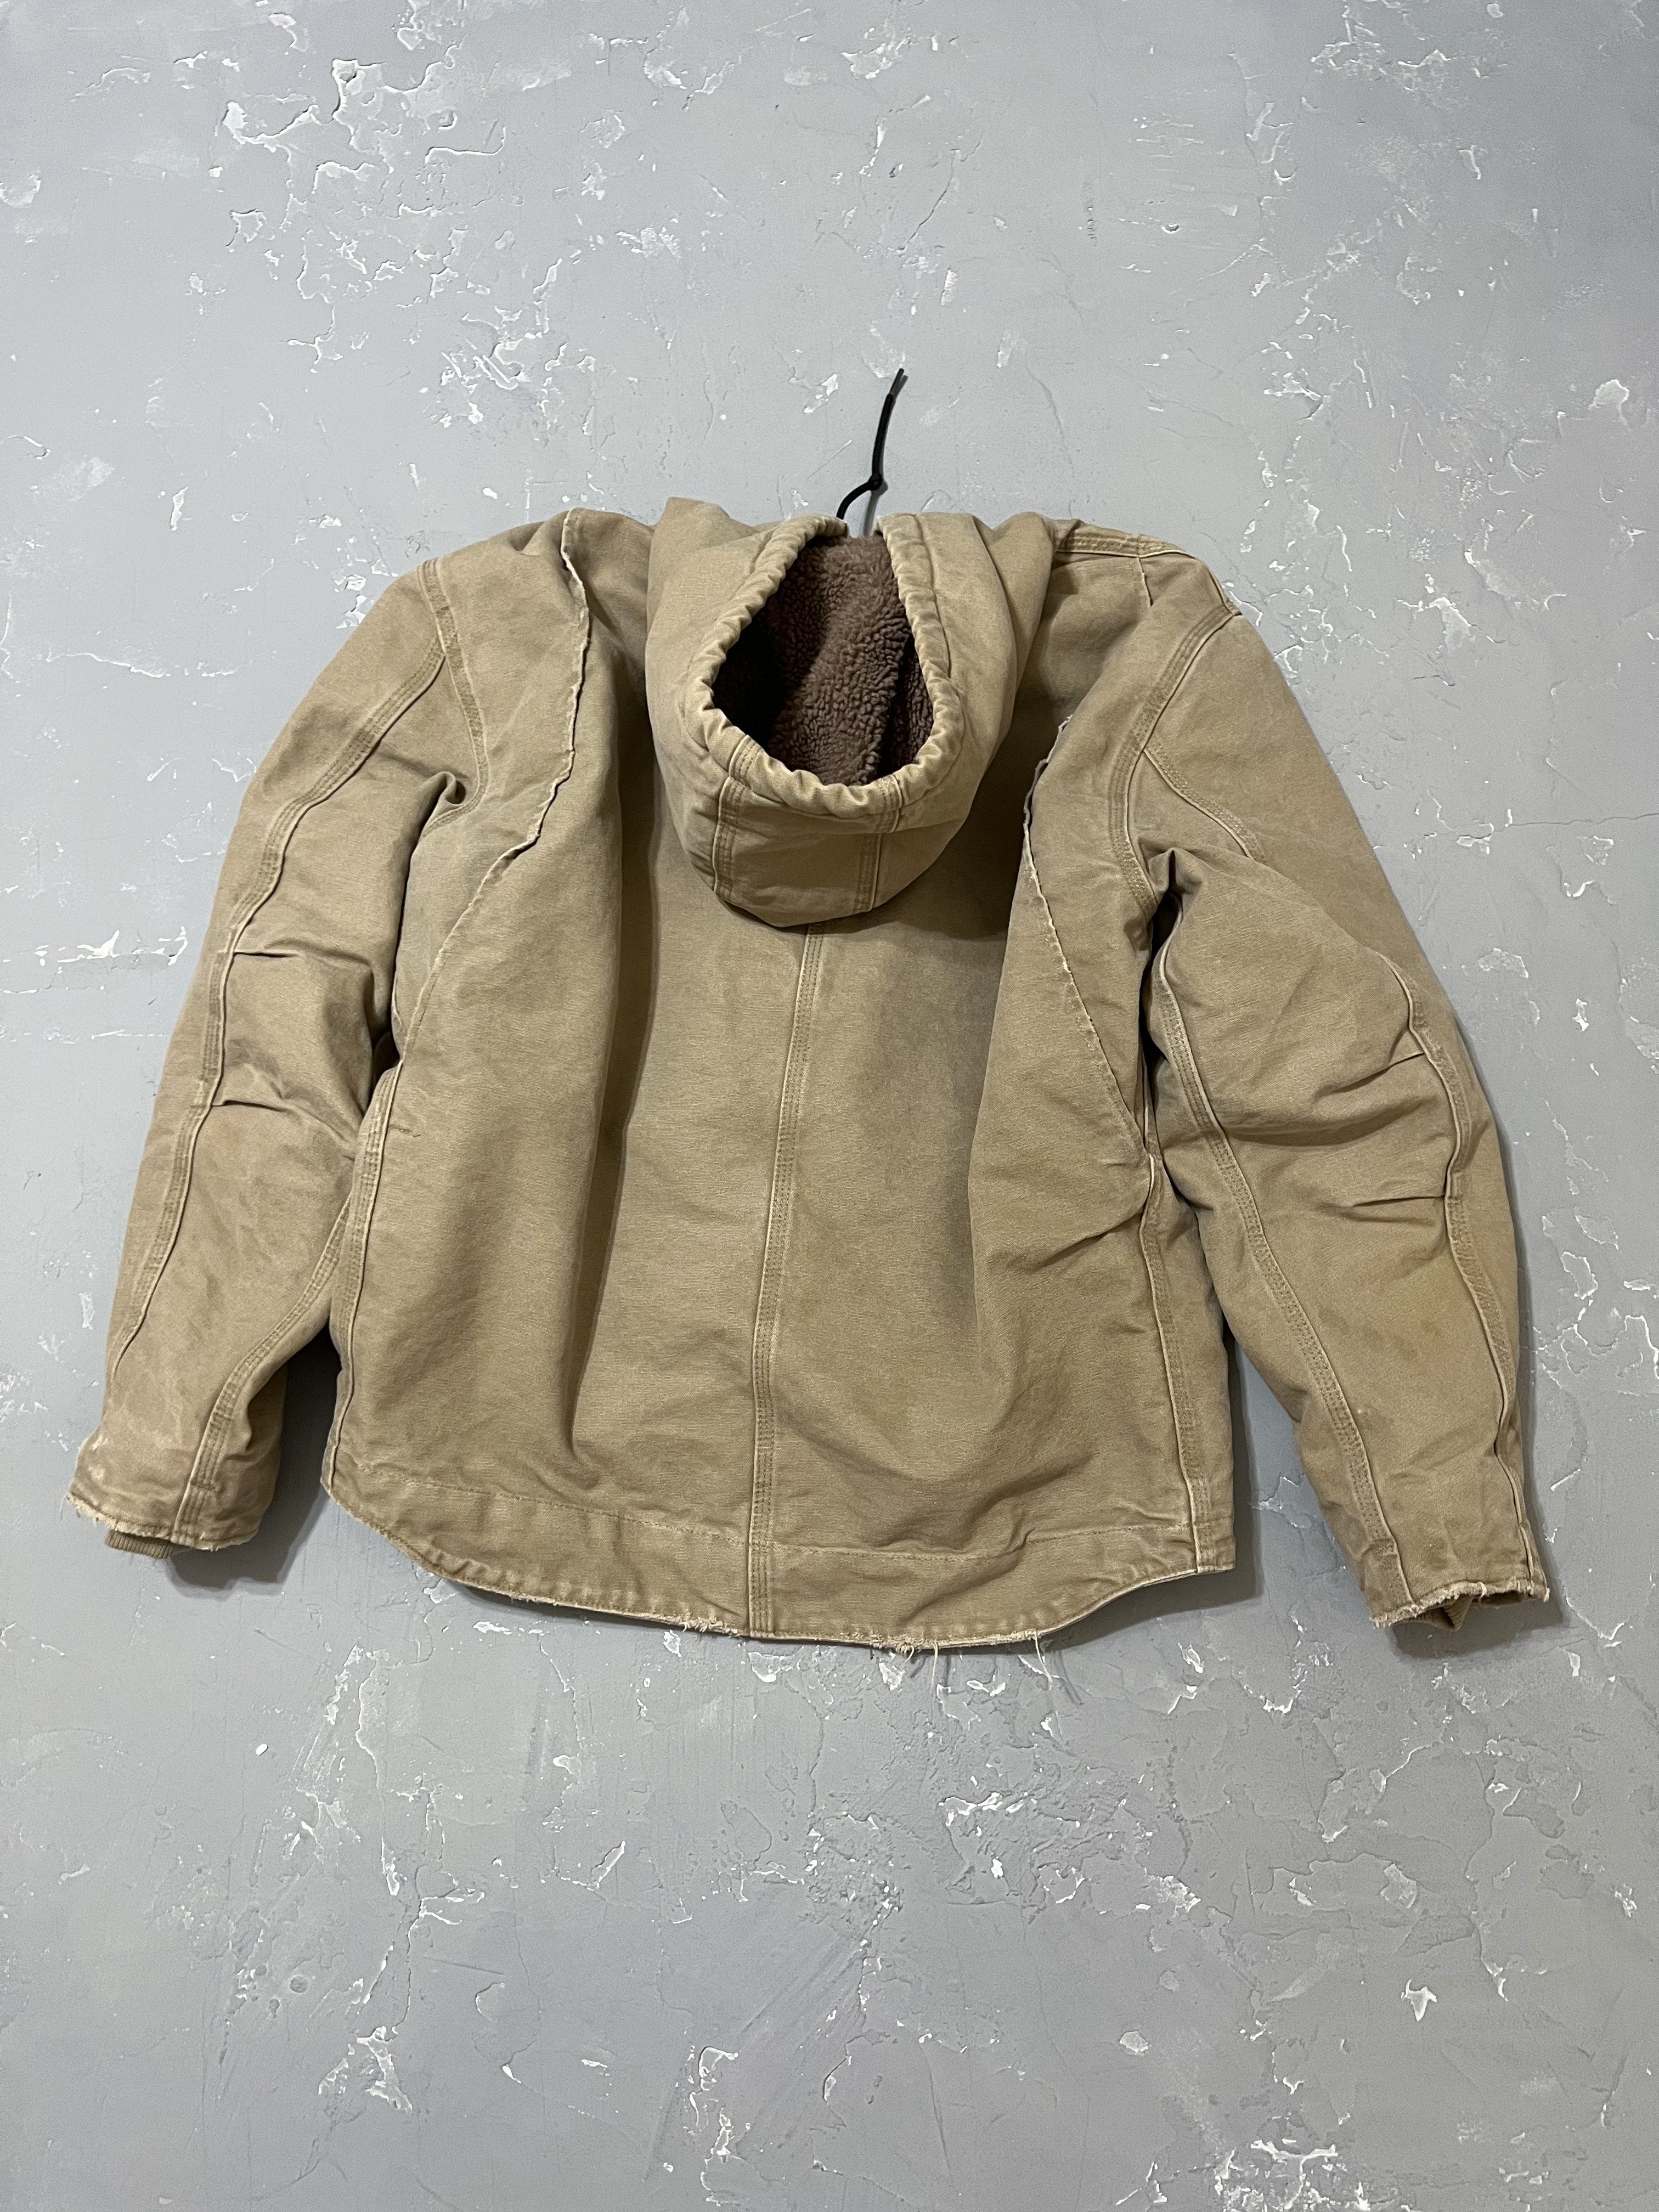 Carhartt Lined Hooded Work Jacket [L]